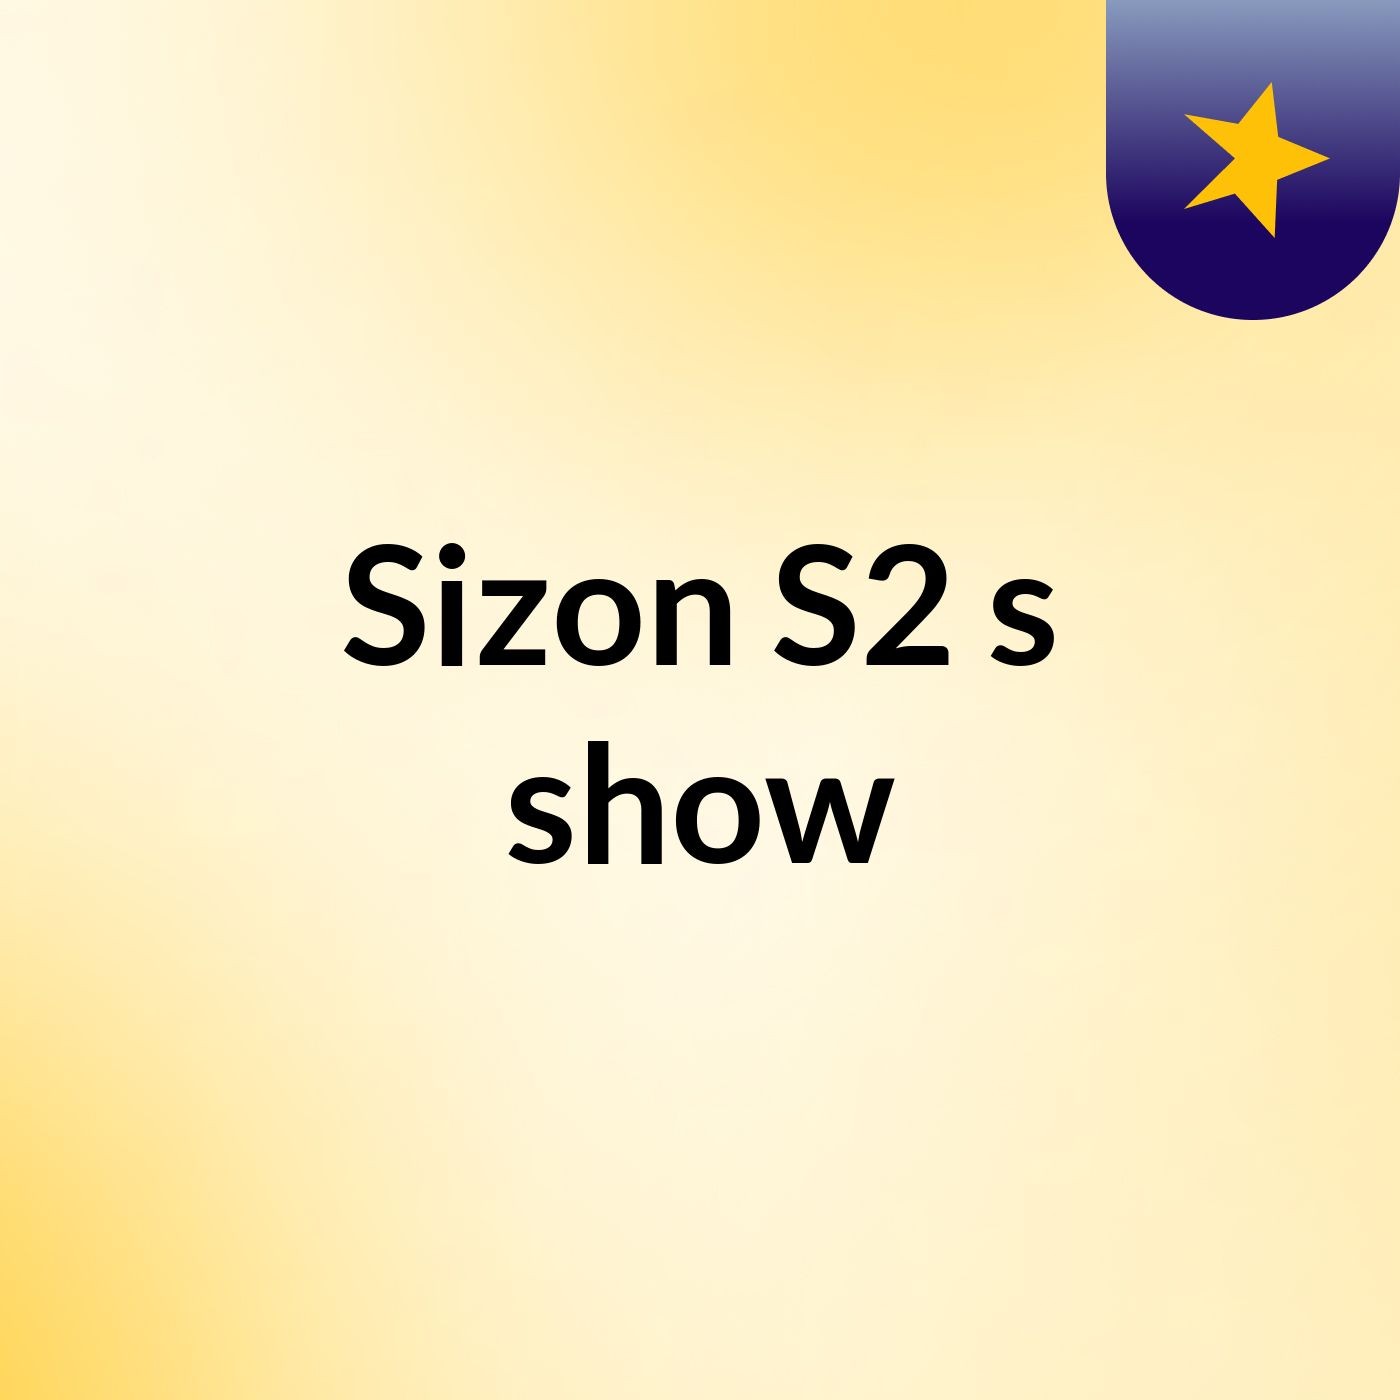 Sizon S2's show